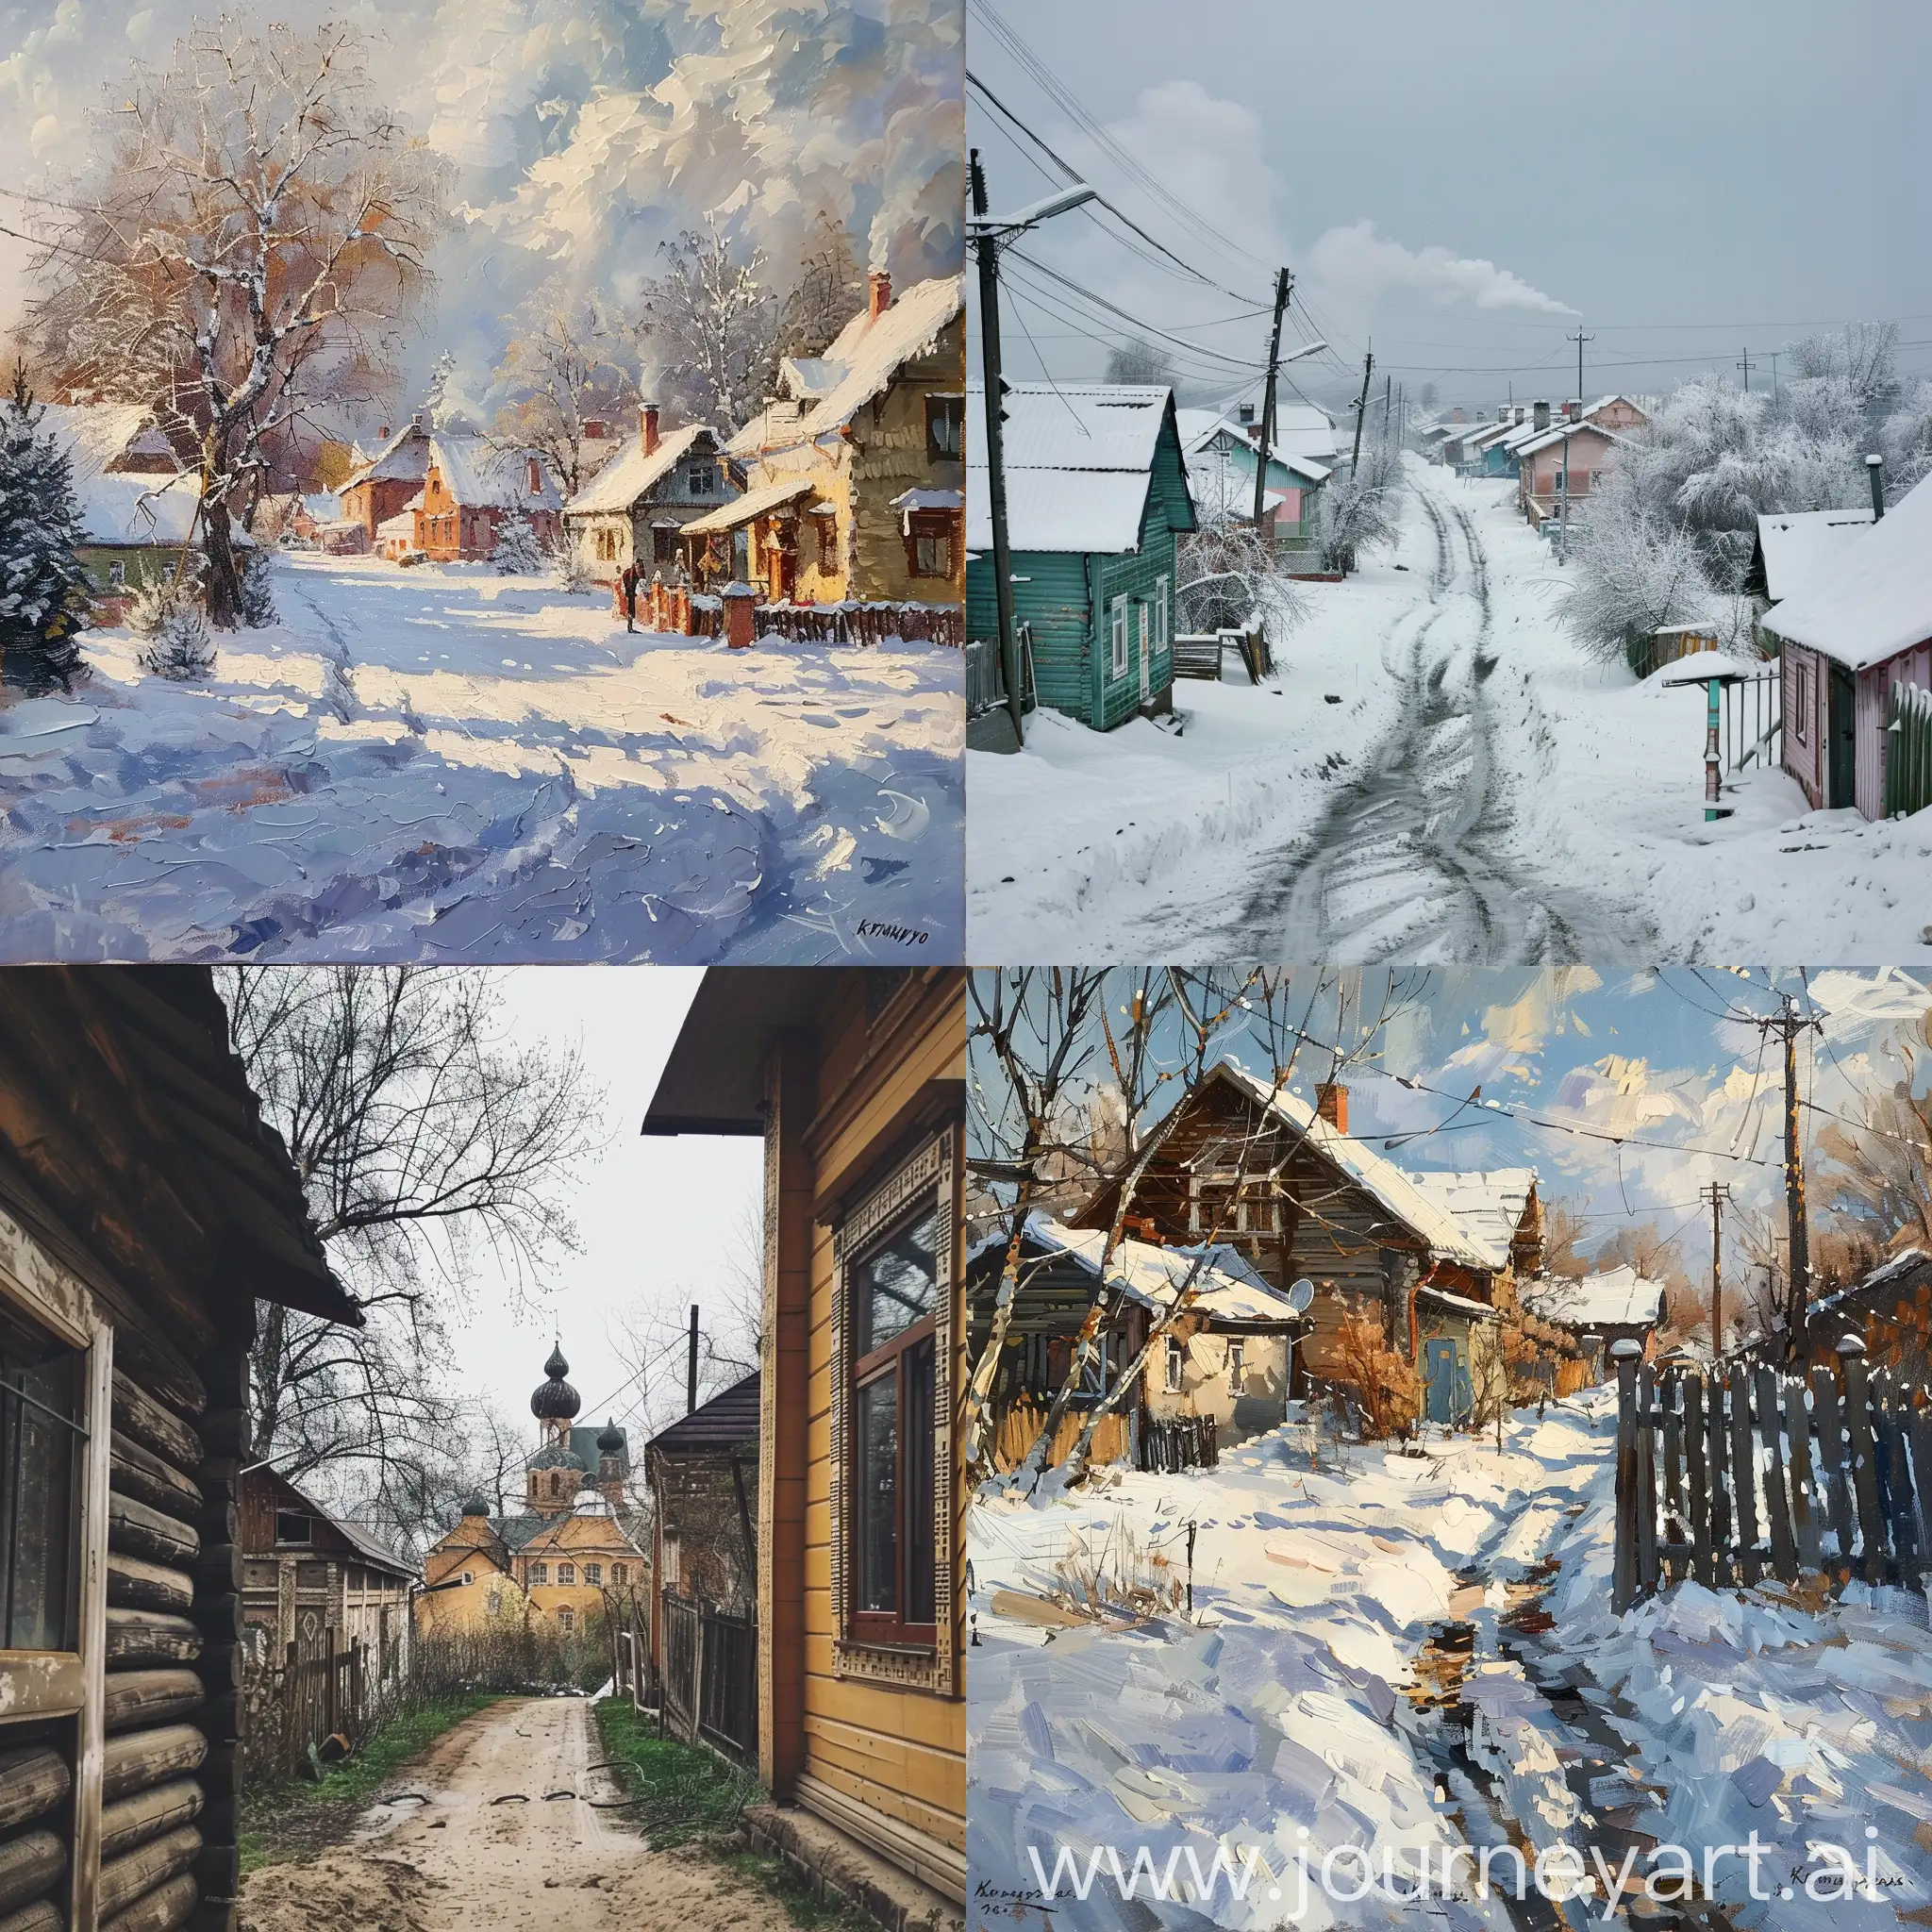 Vibrant-Khruchyevo-Village-Scene-Colorful-Rural-Life-in-11-Aspect-Ratio